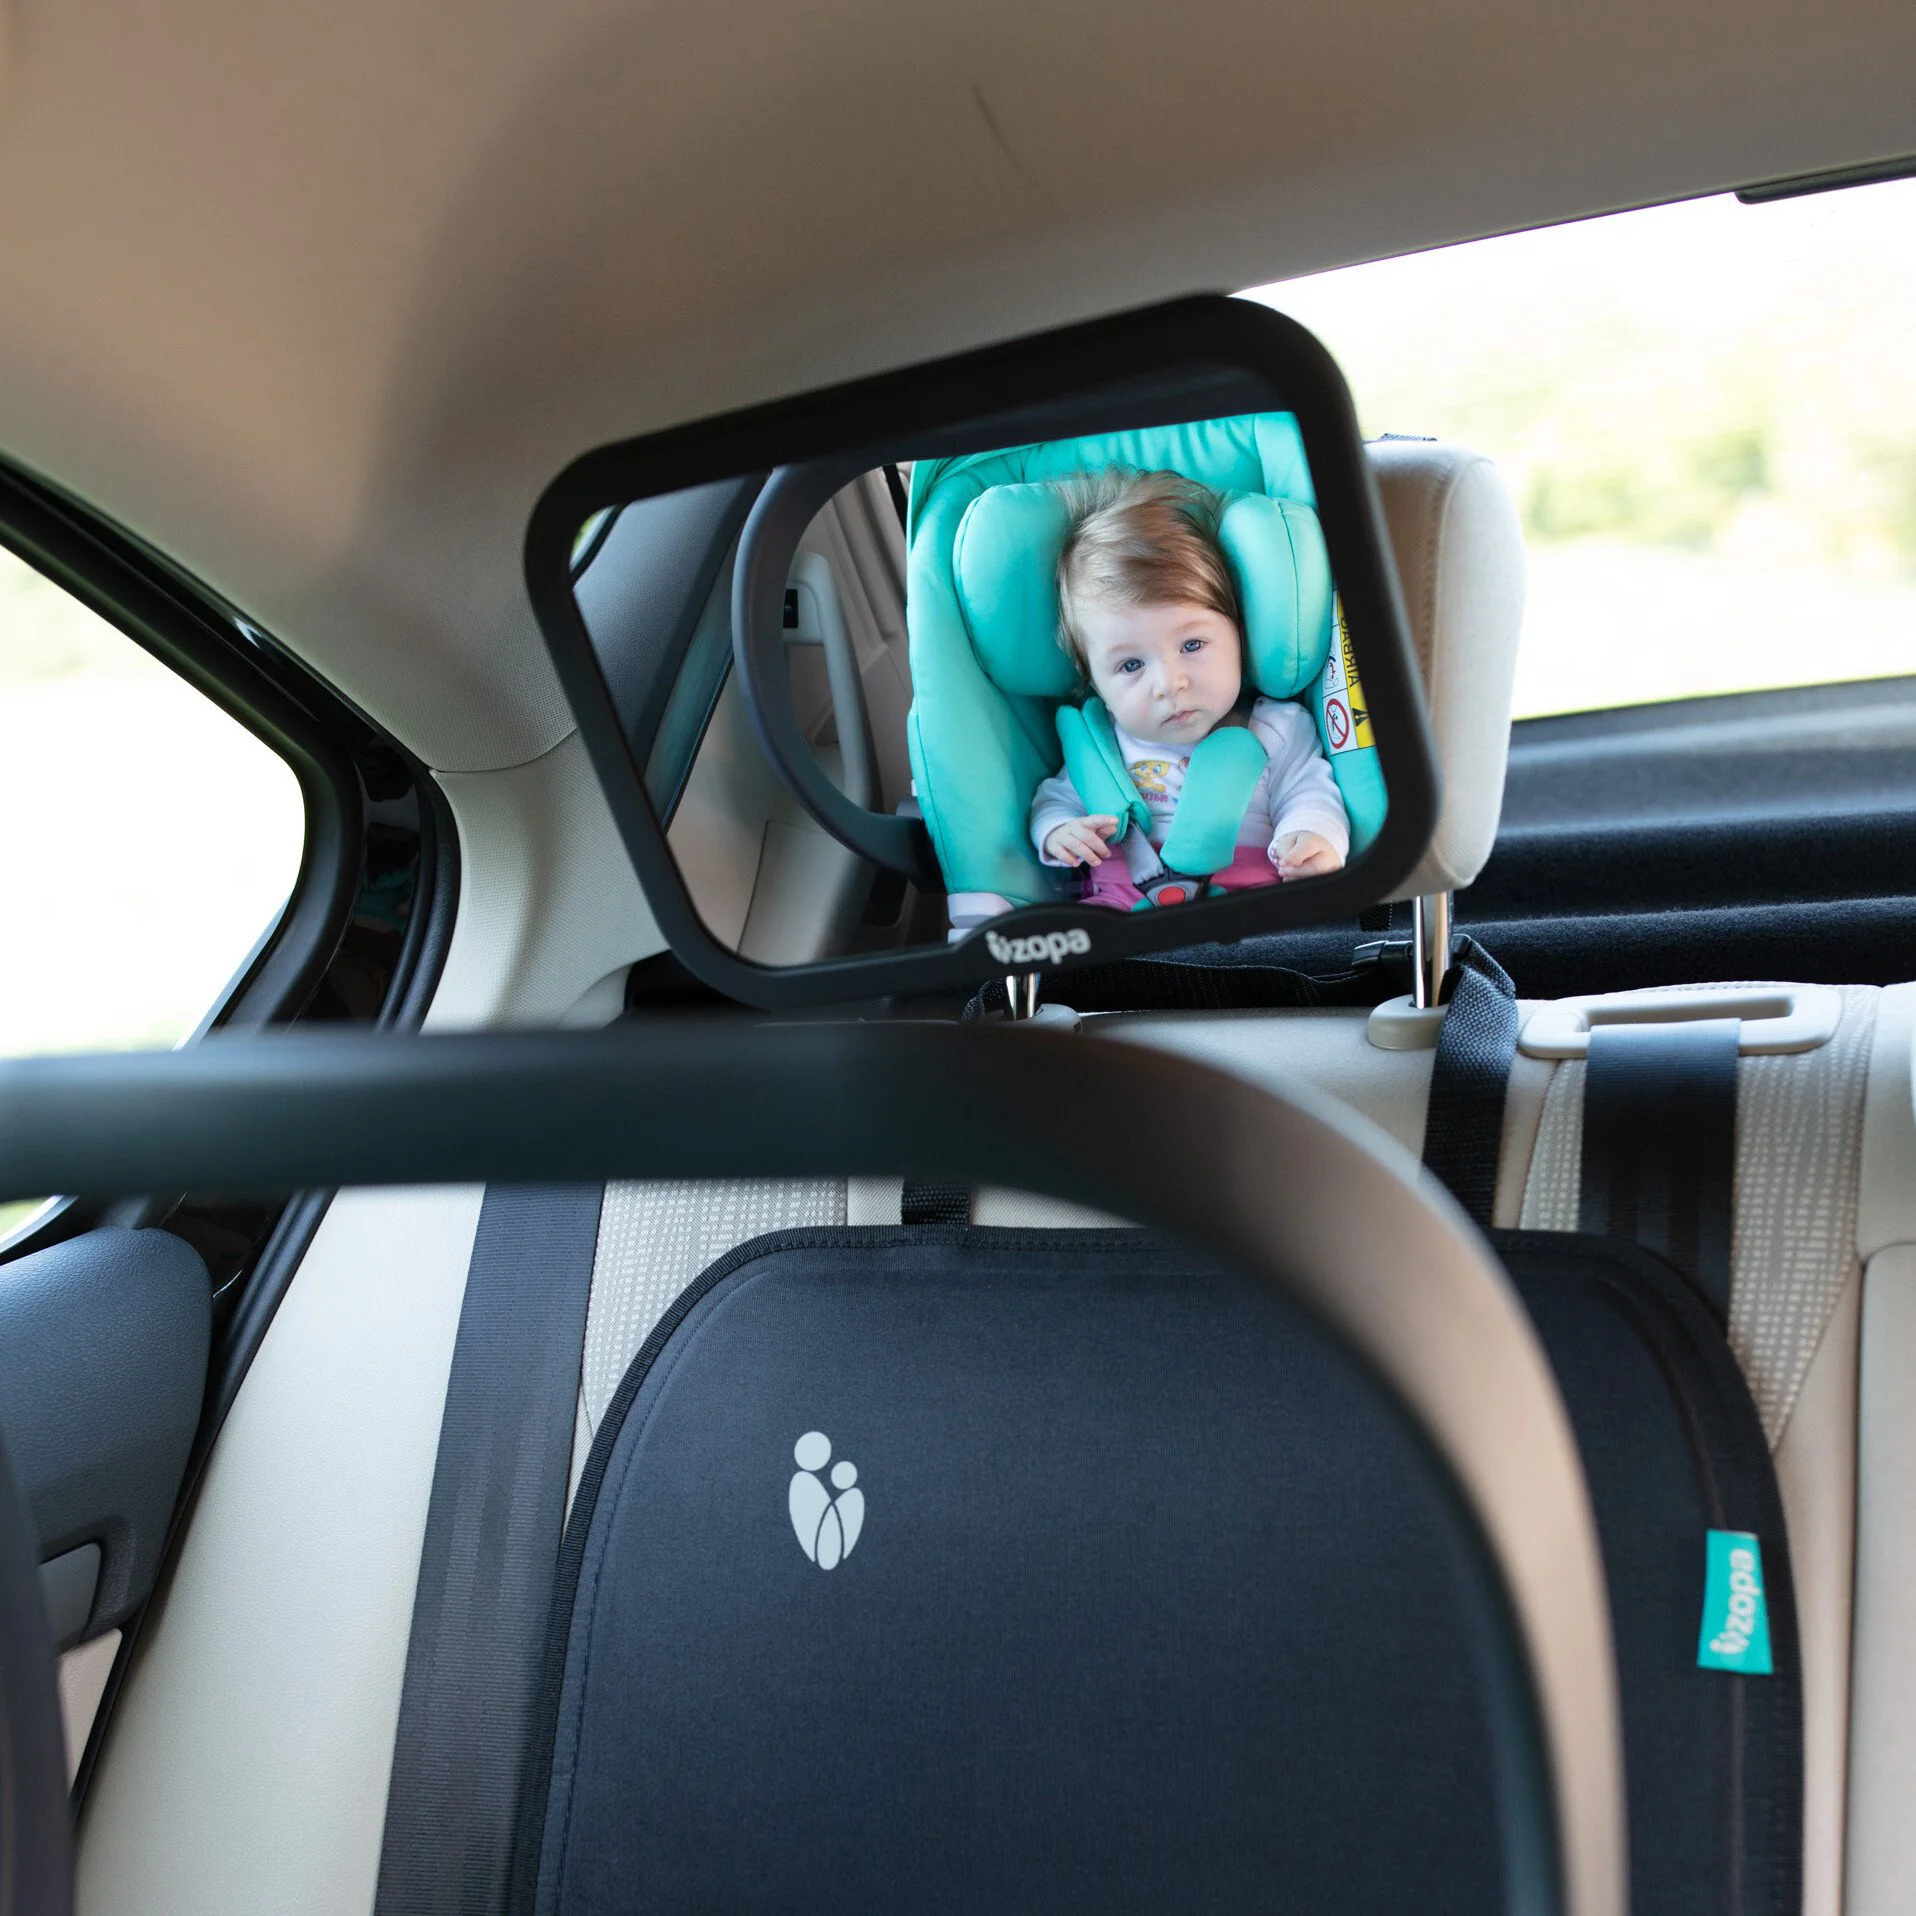 Oglinda retrovizoare pentru bebe ZOPA (perspectiva 360 grade)